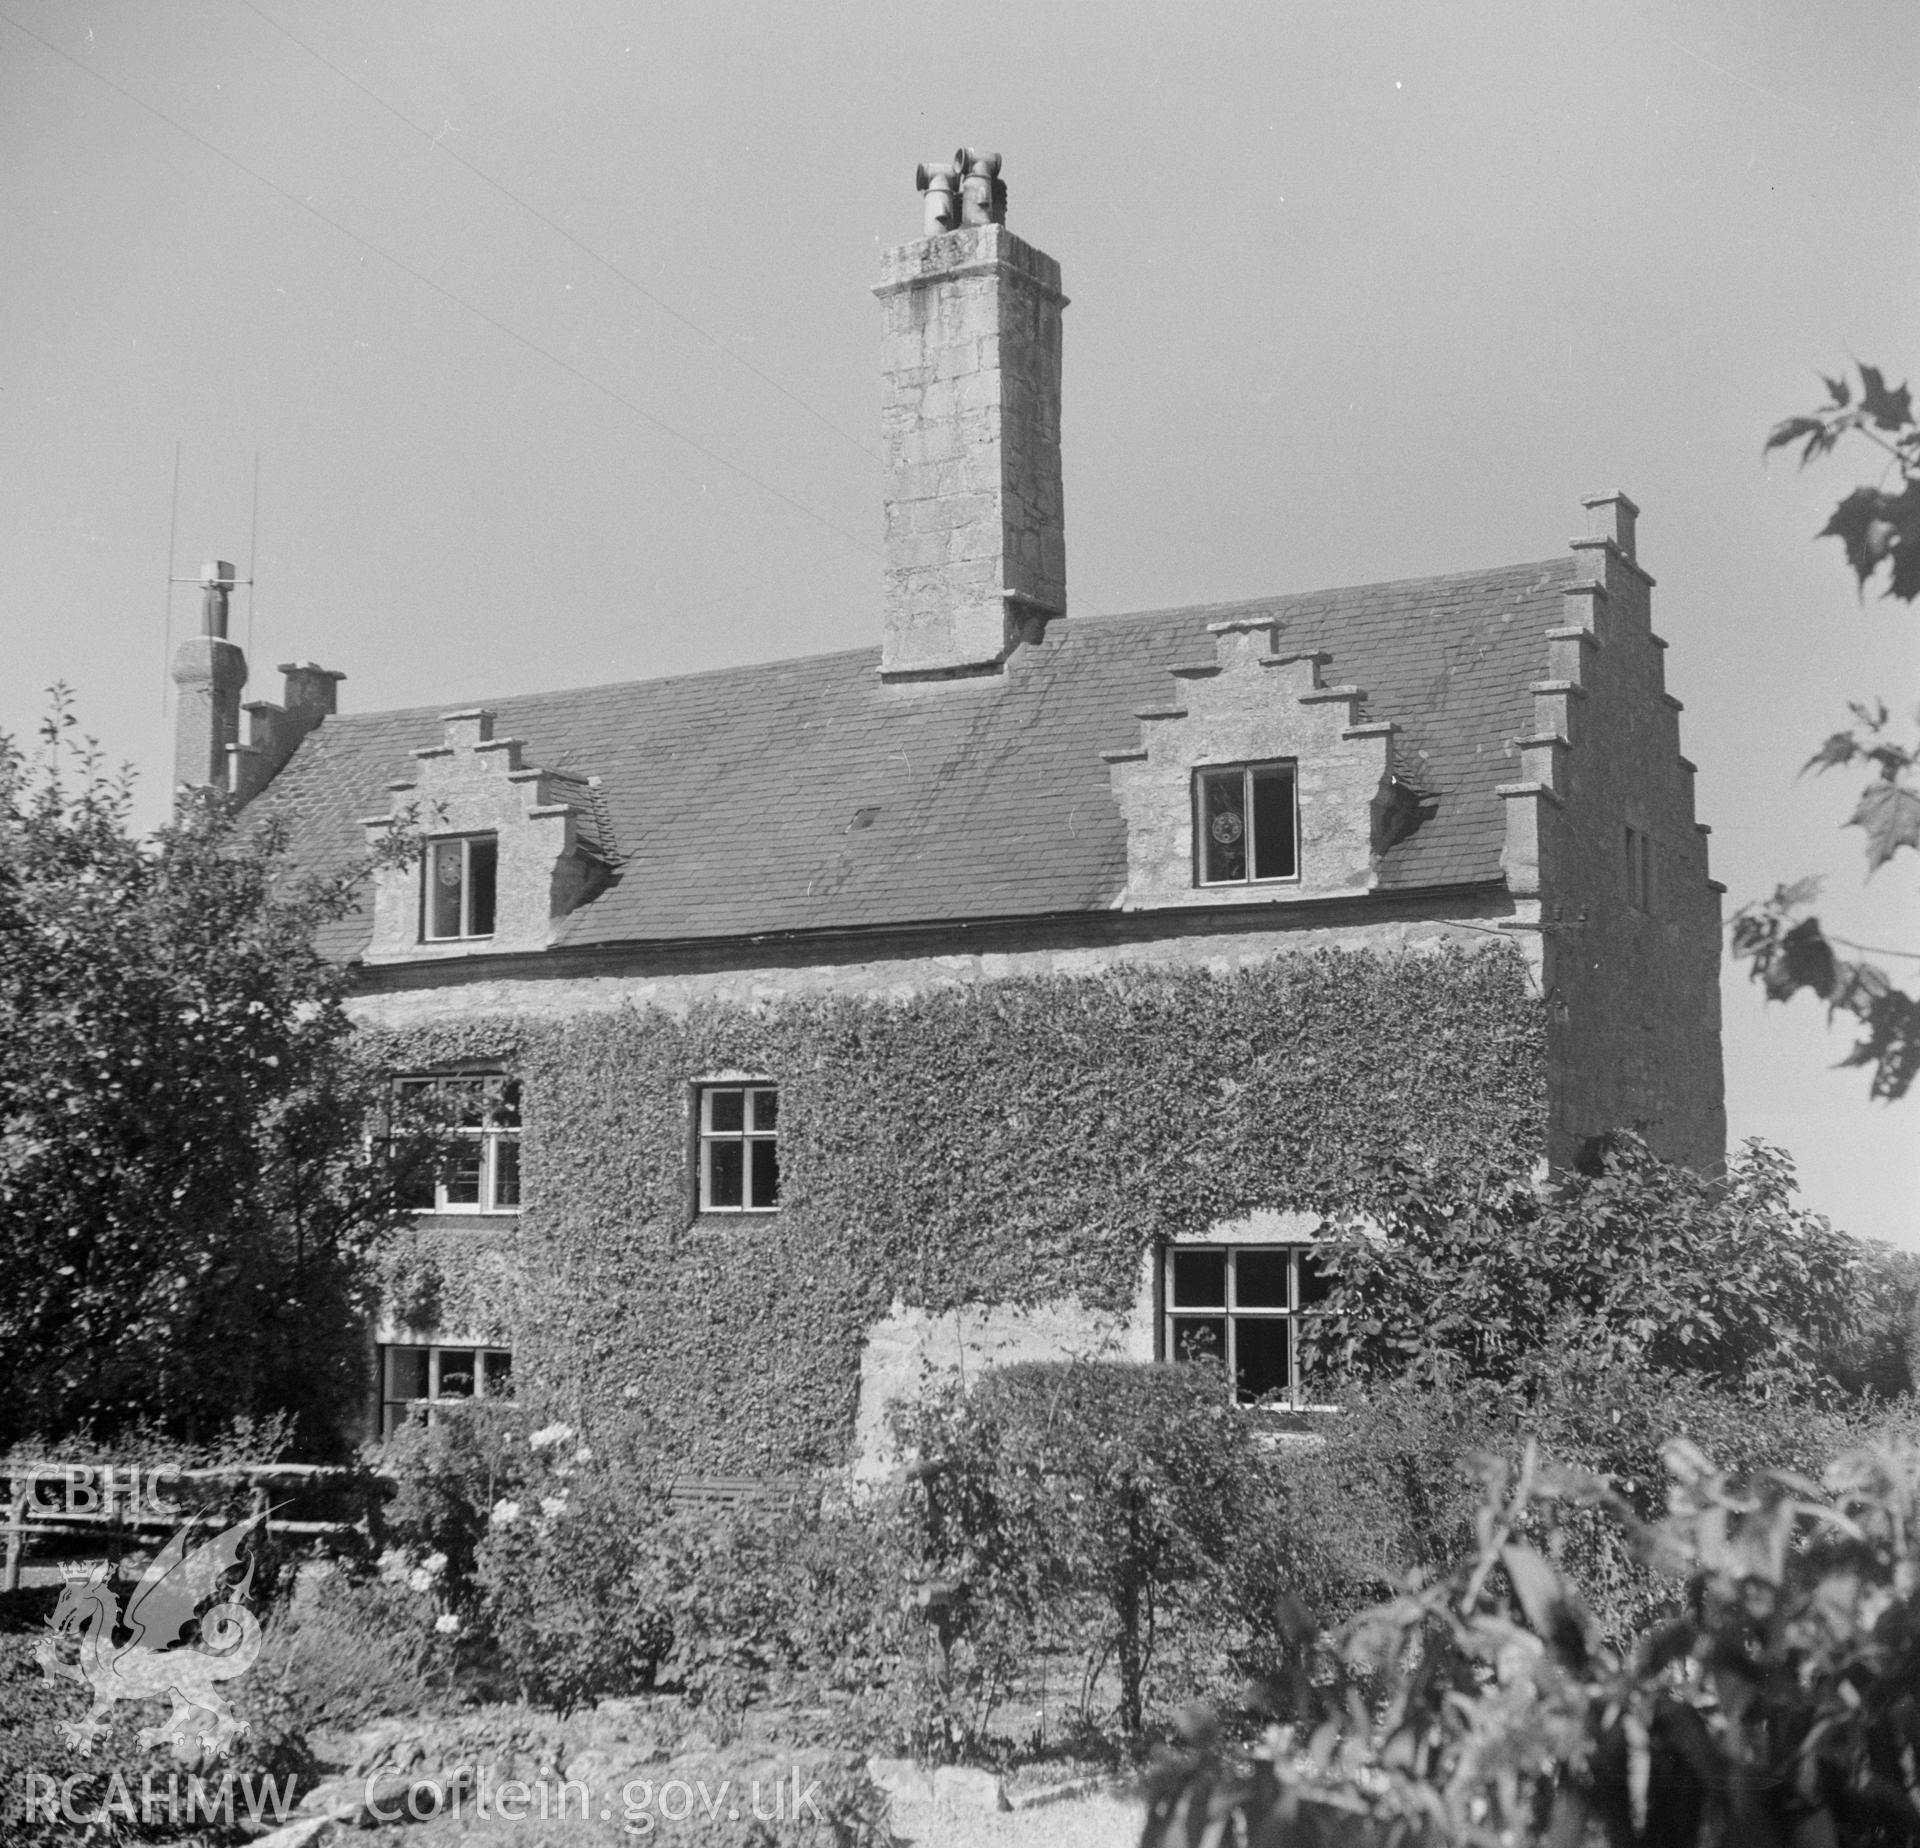 Digital copy of a nitrate negative showing exterior view of Pen Isaf, Glascoed, Bodelwydden, Flintshire.